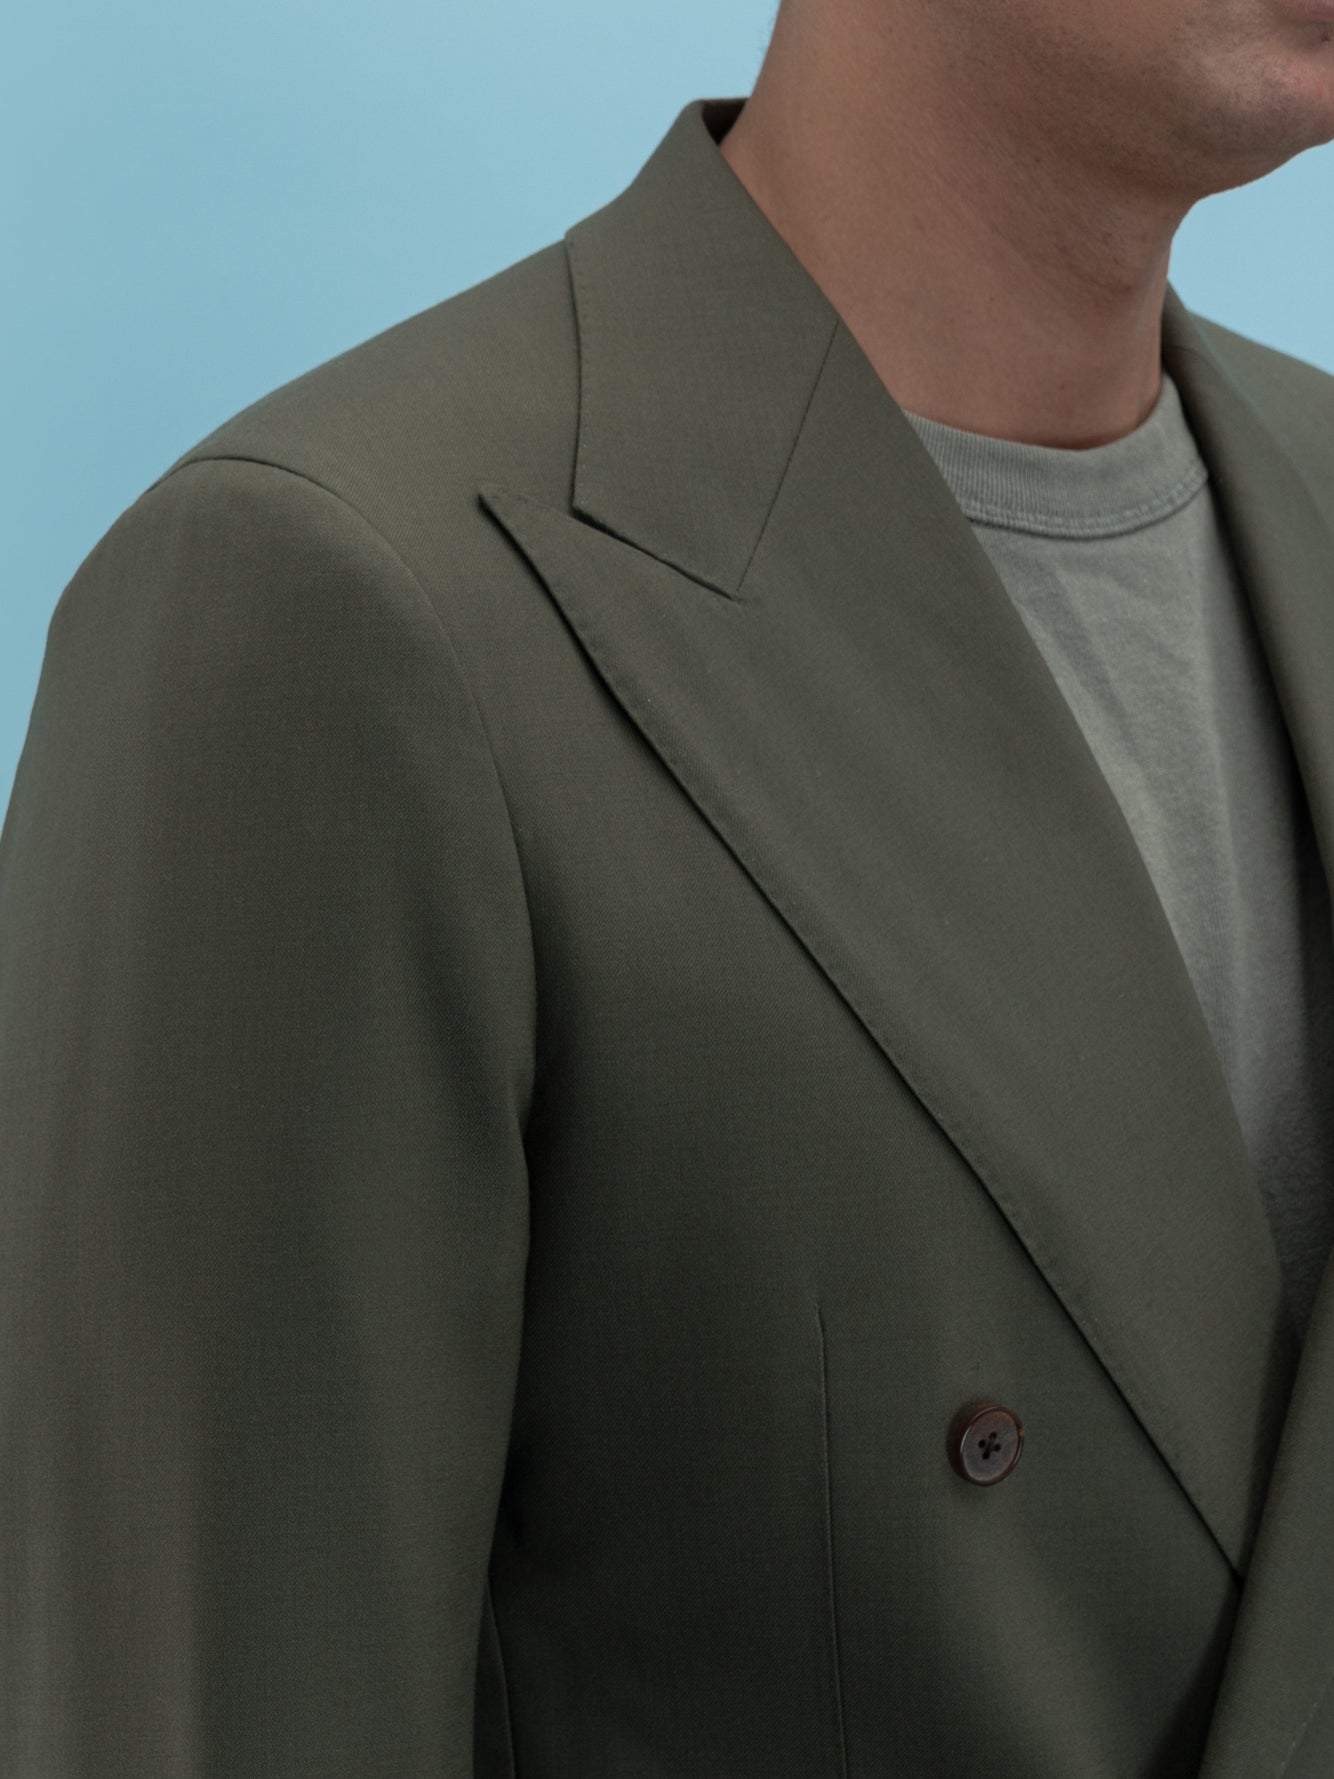 Khaki Green Super 130's Wool Suit - Grand Le Mar